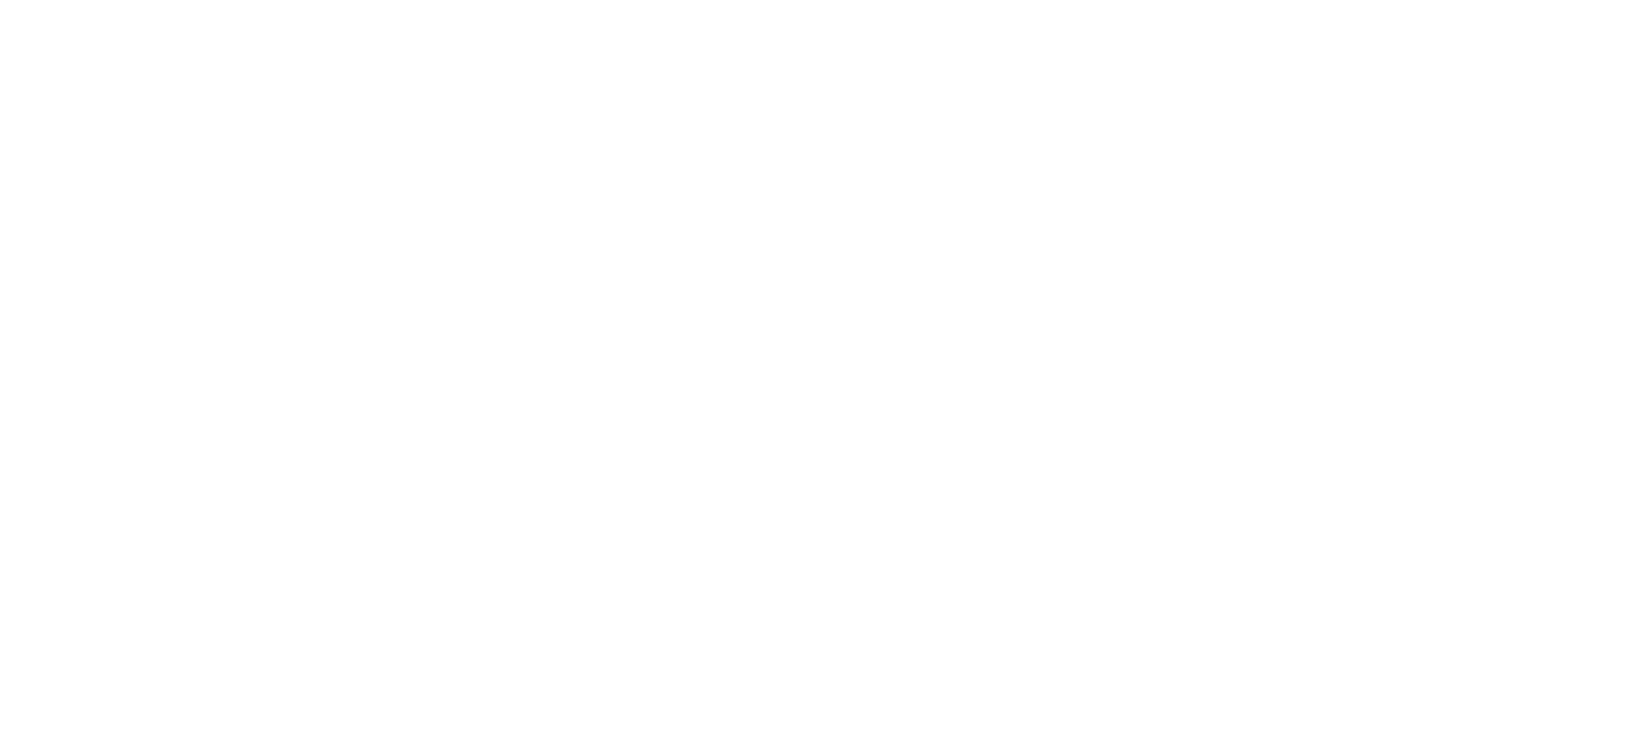 ZOTA Professional Training